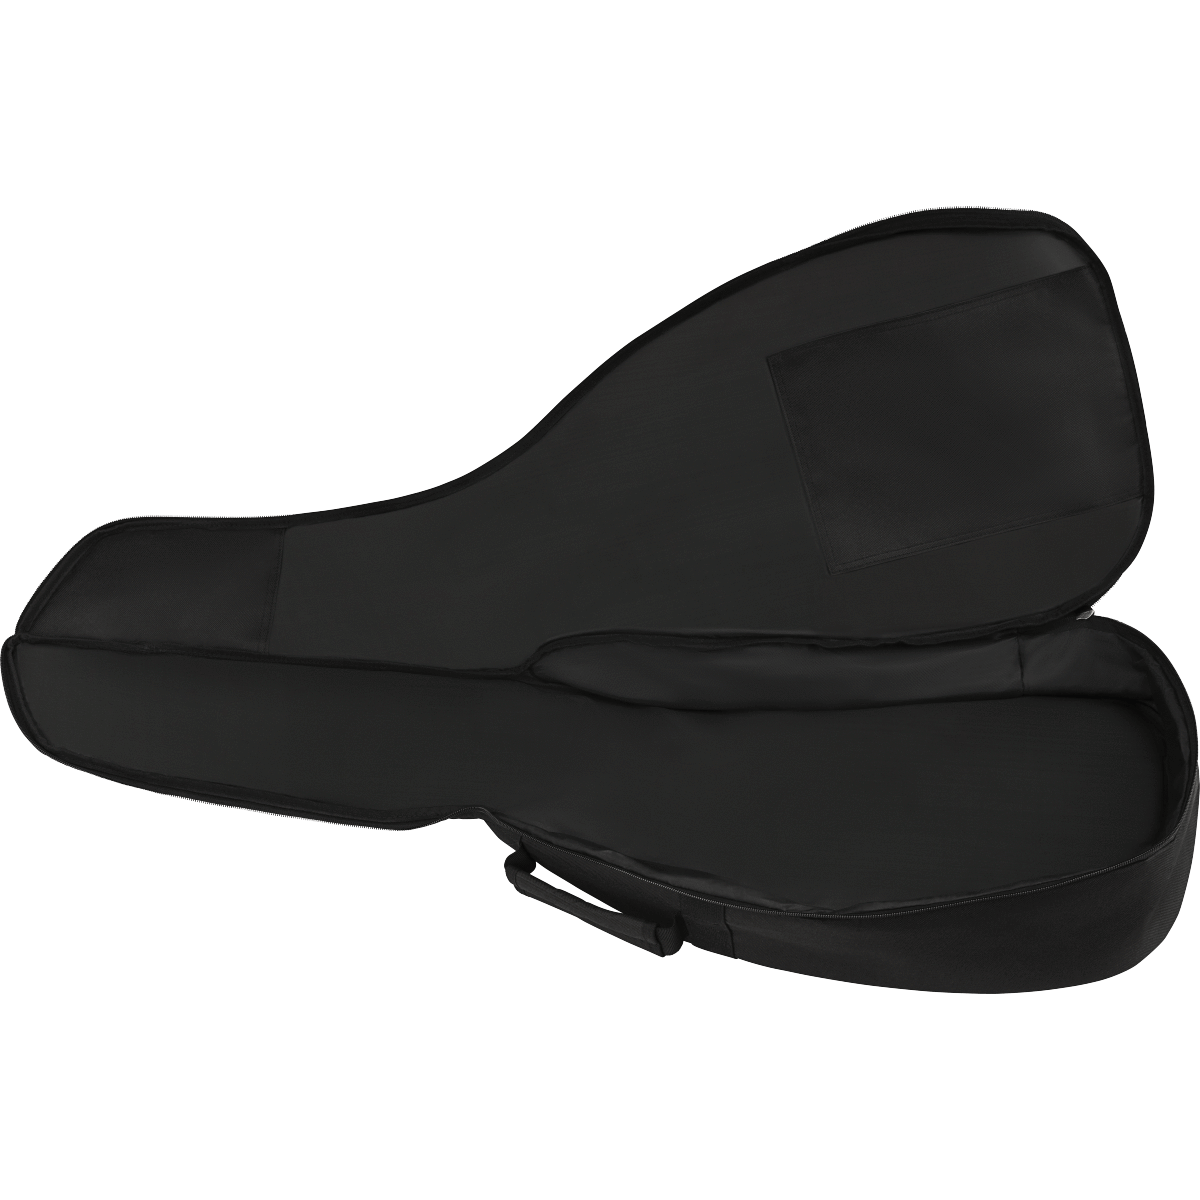 Fender Guitar Accessories Fender Gig Bag Small Body Acoustic Black FAS405 - Byron Music